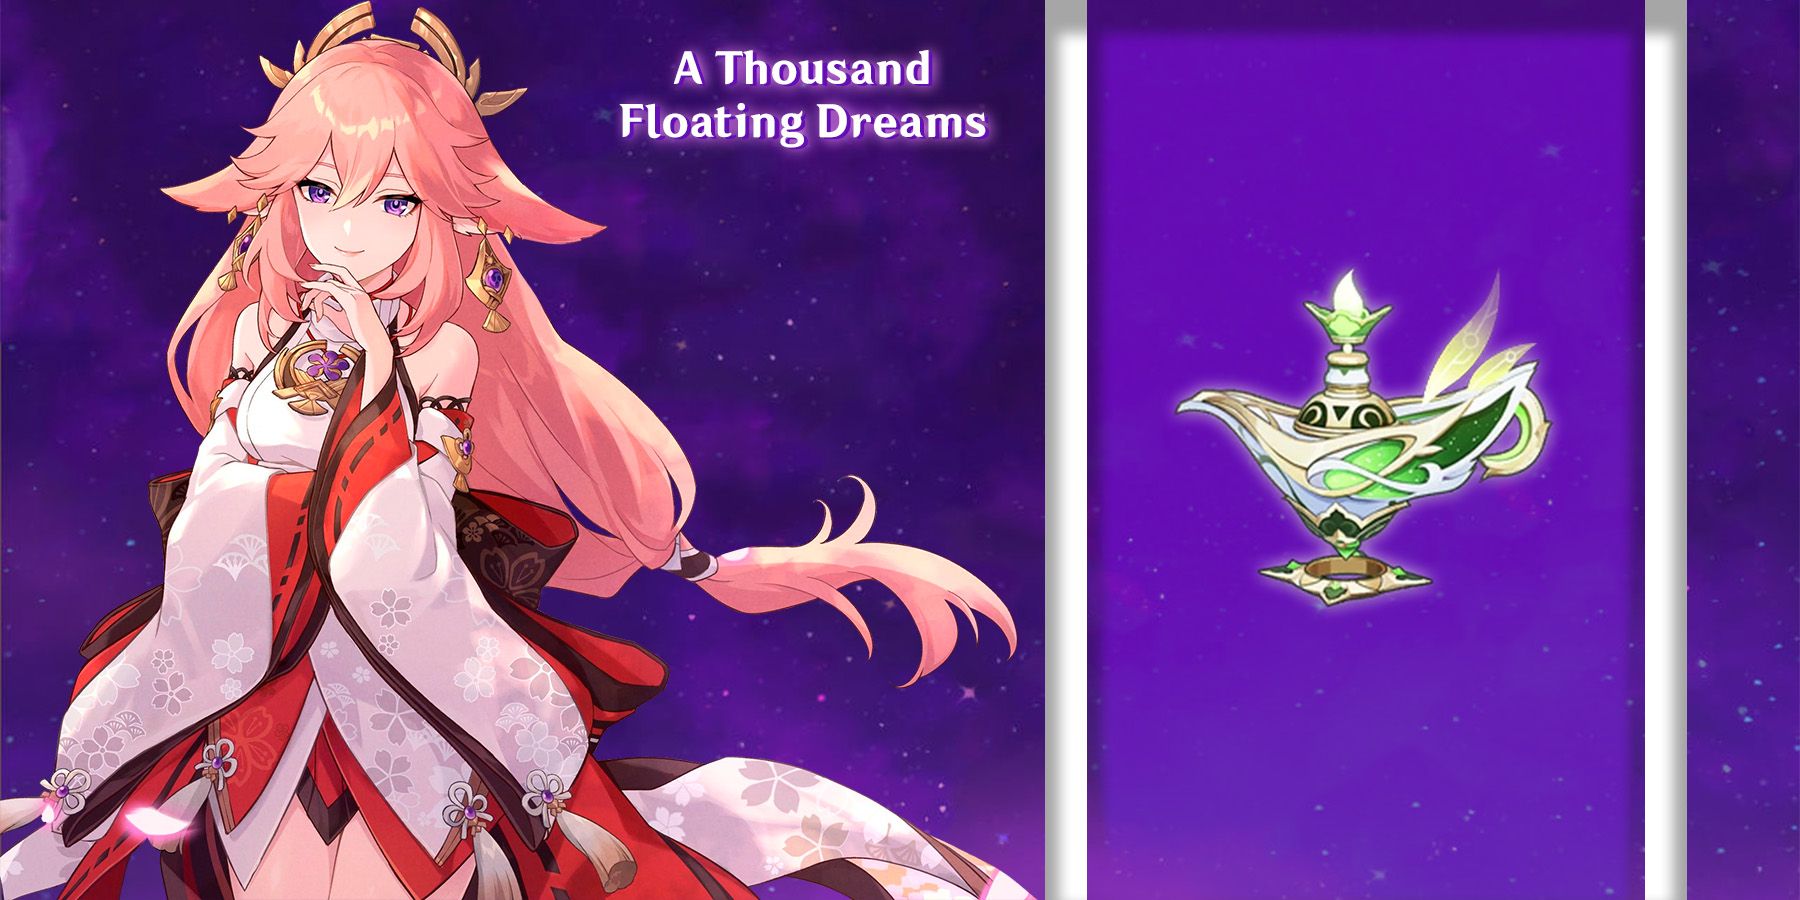 yae miko using a thousand floating dreams in genshin impact